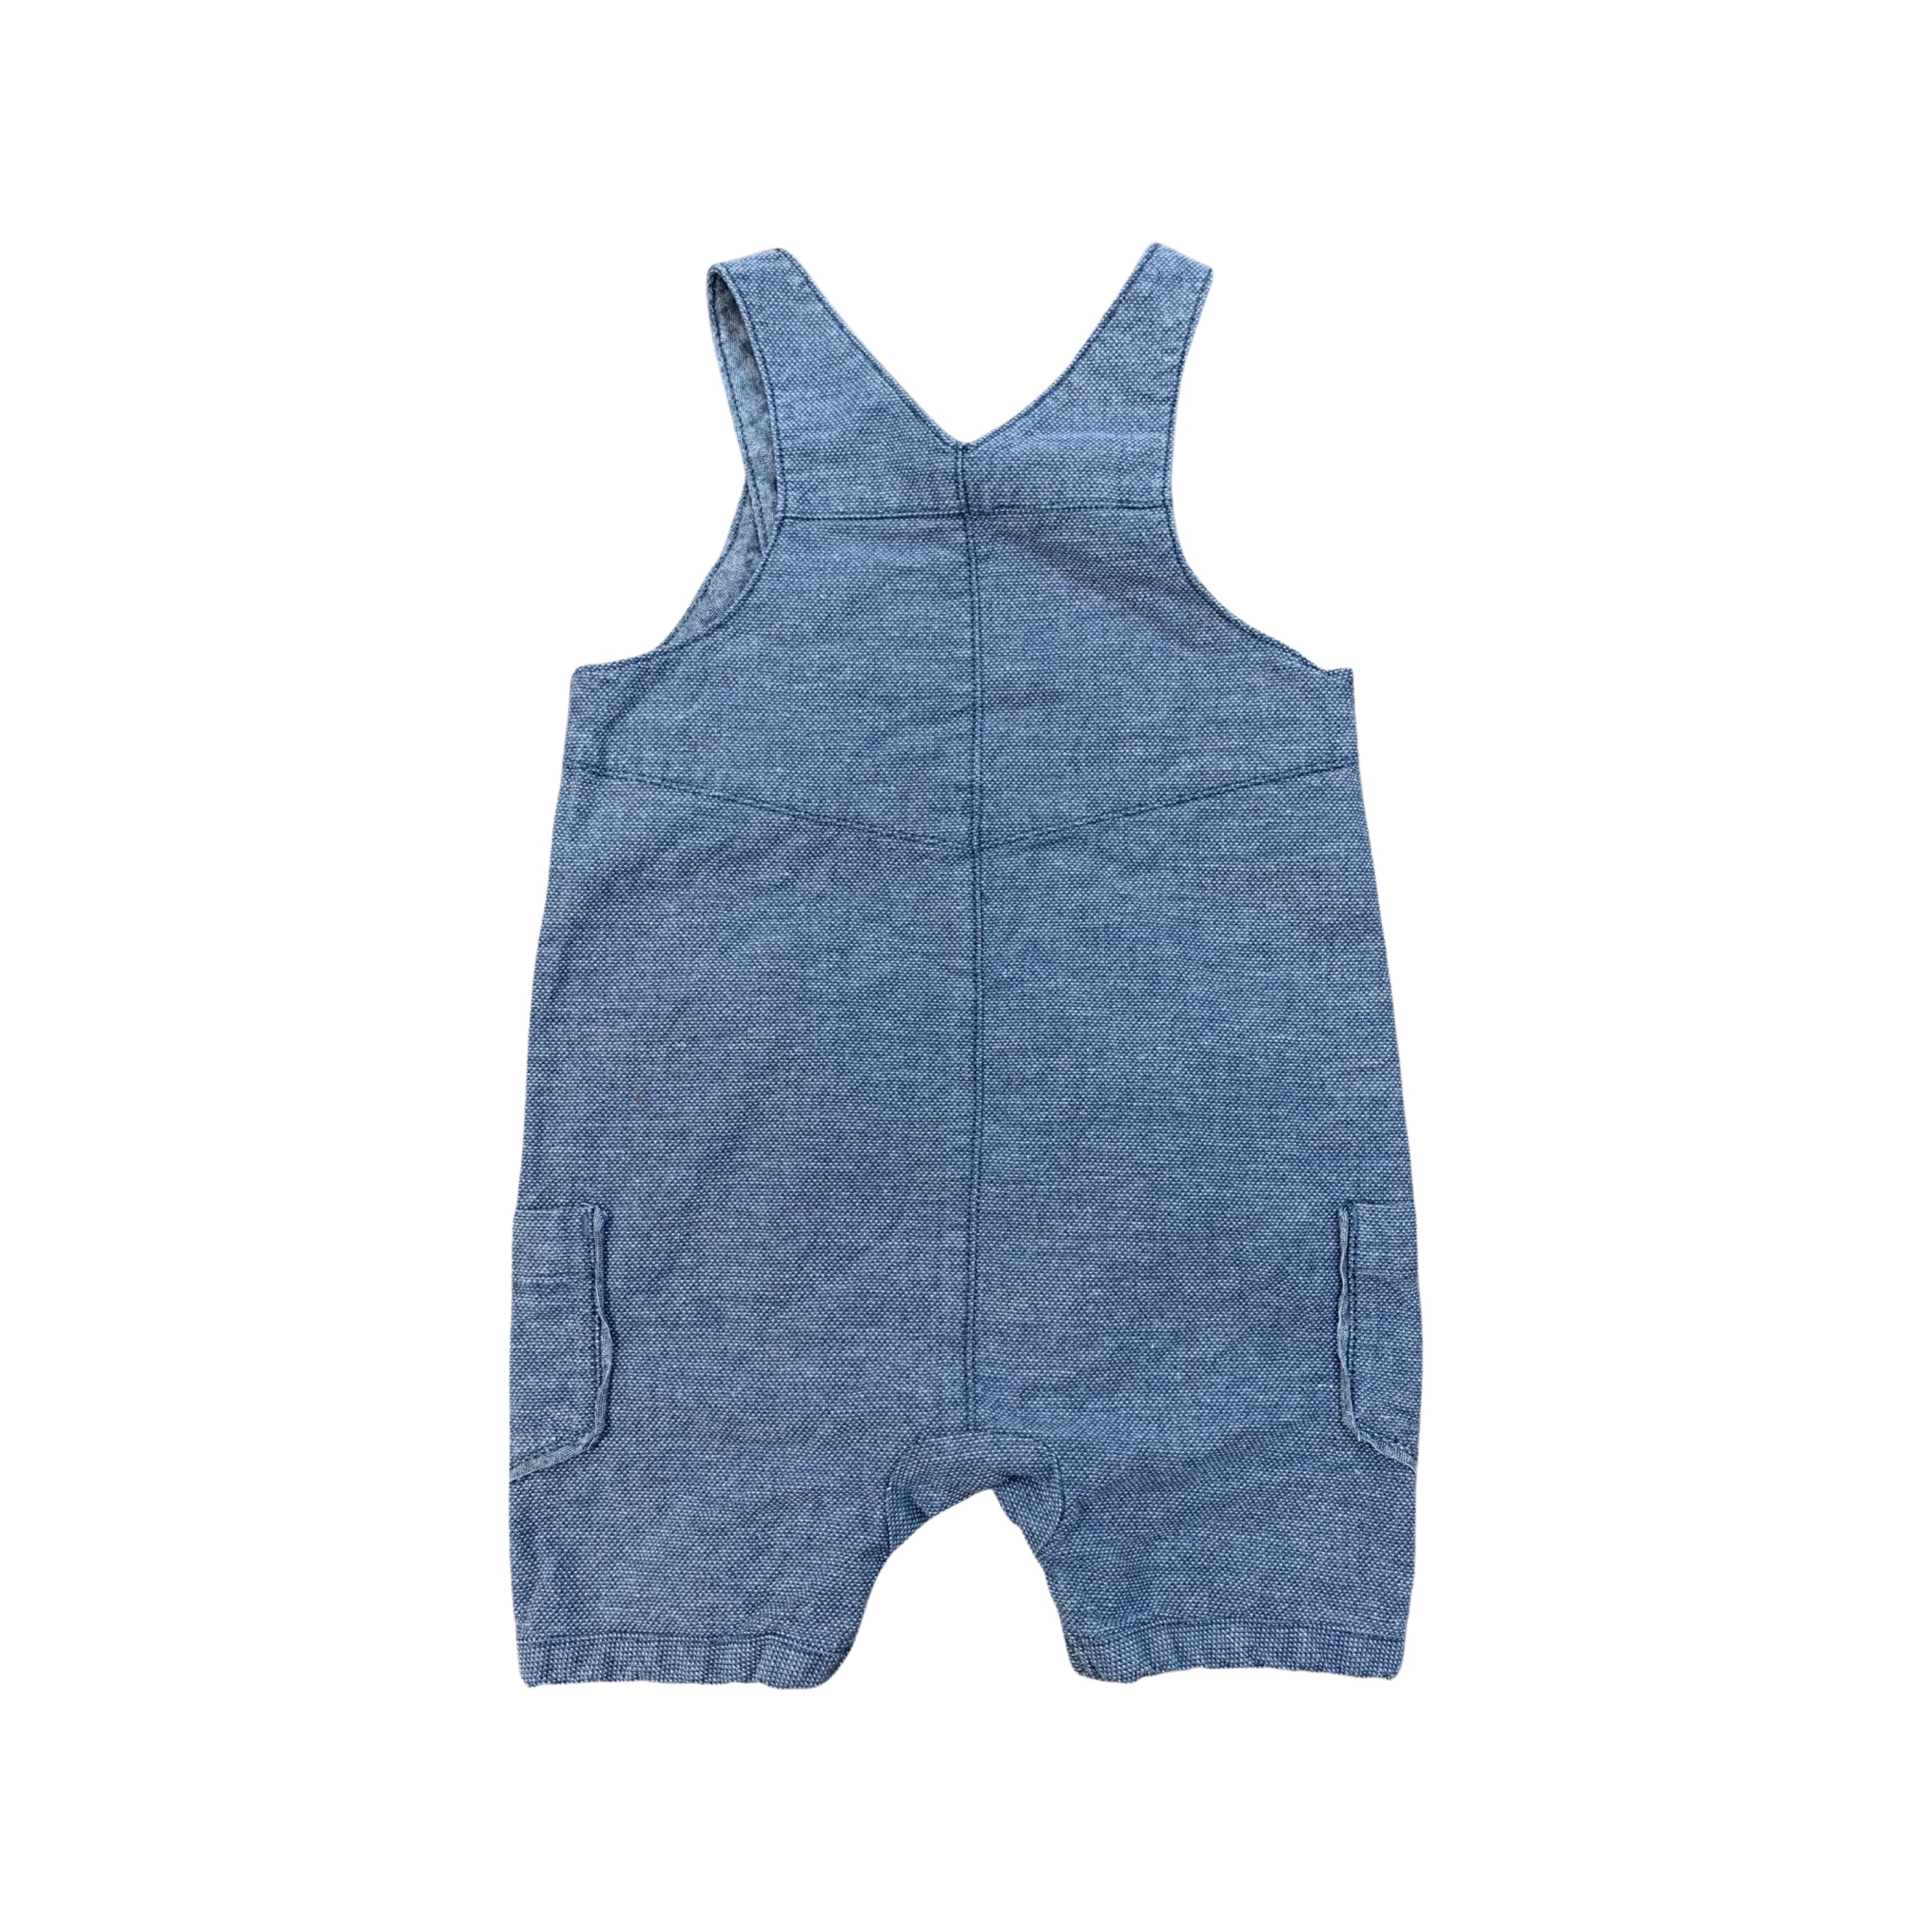 Mini Club Dungaree Shorts Baby Boy 6-9 Months/19.8lbs